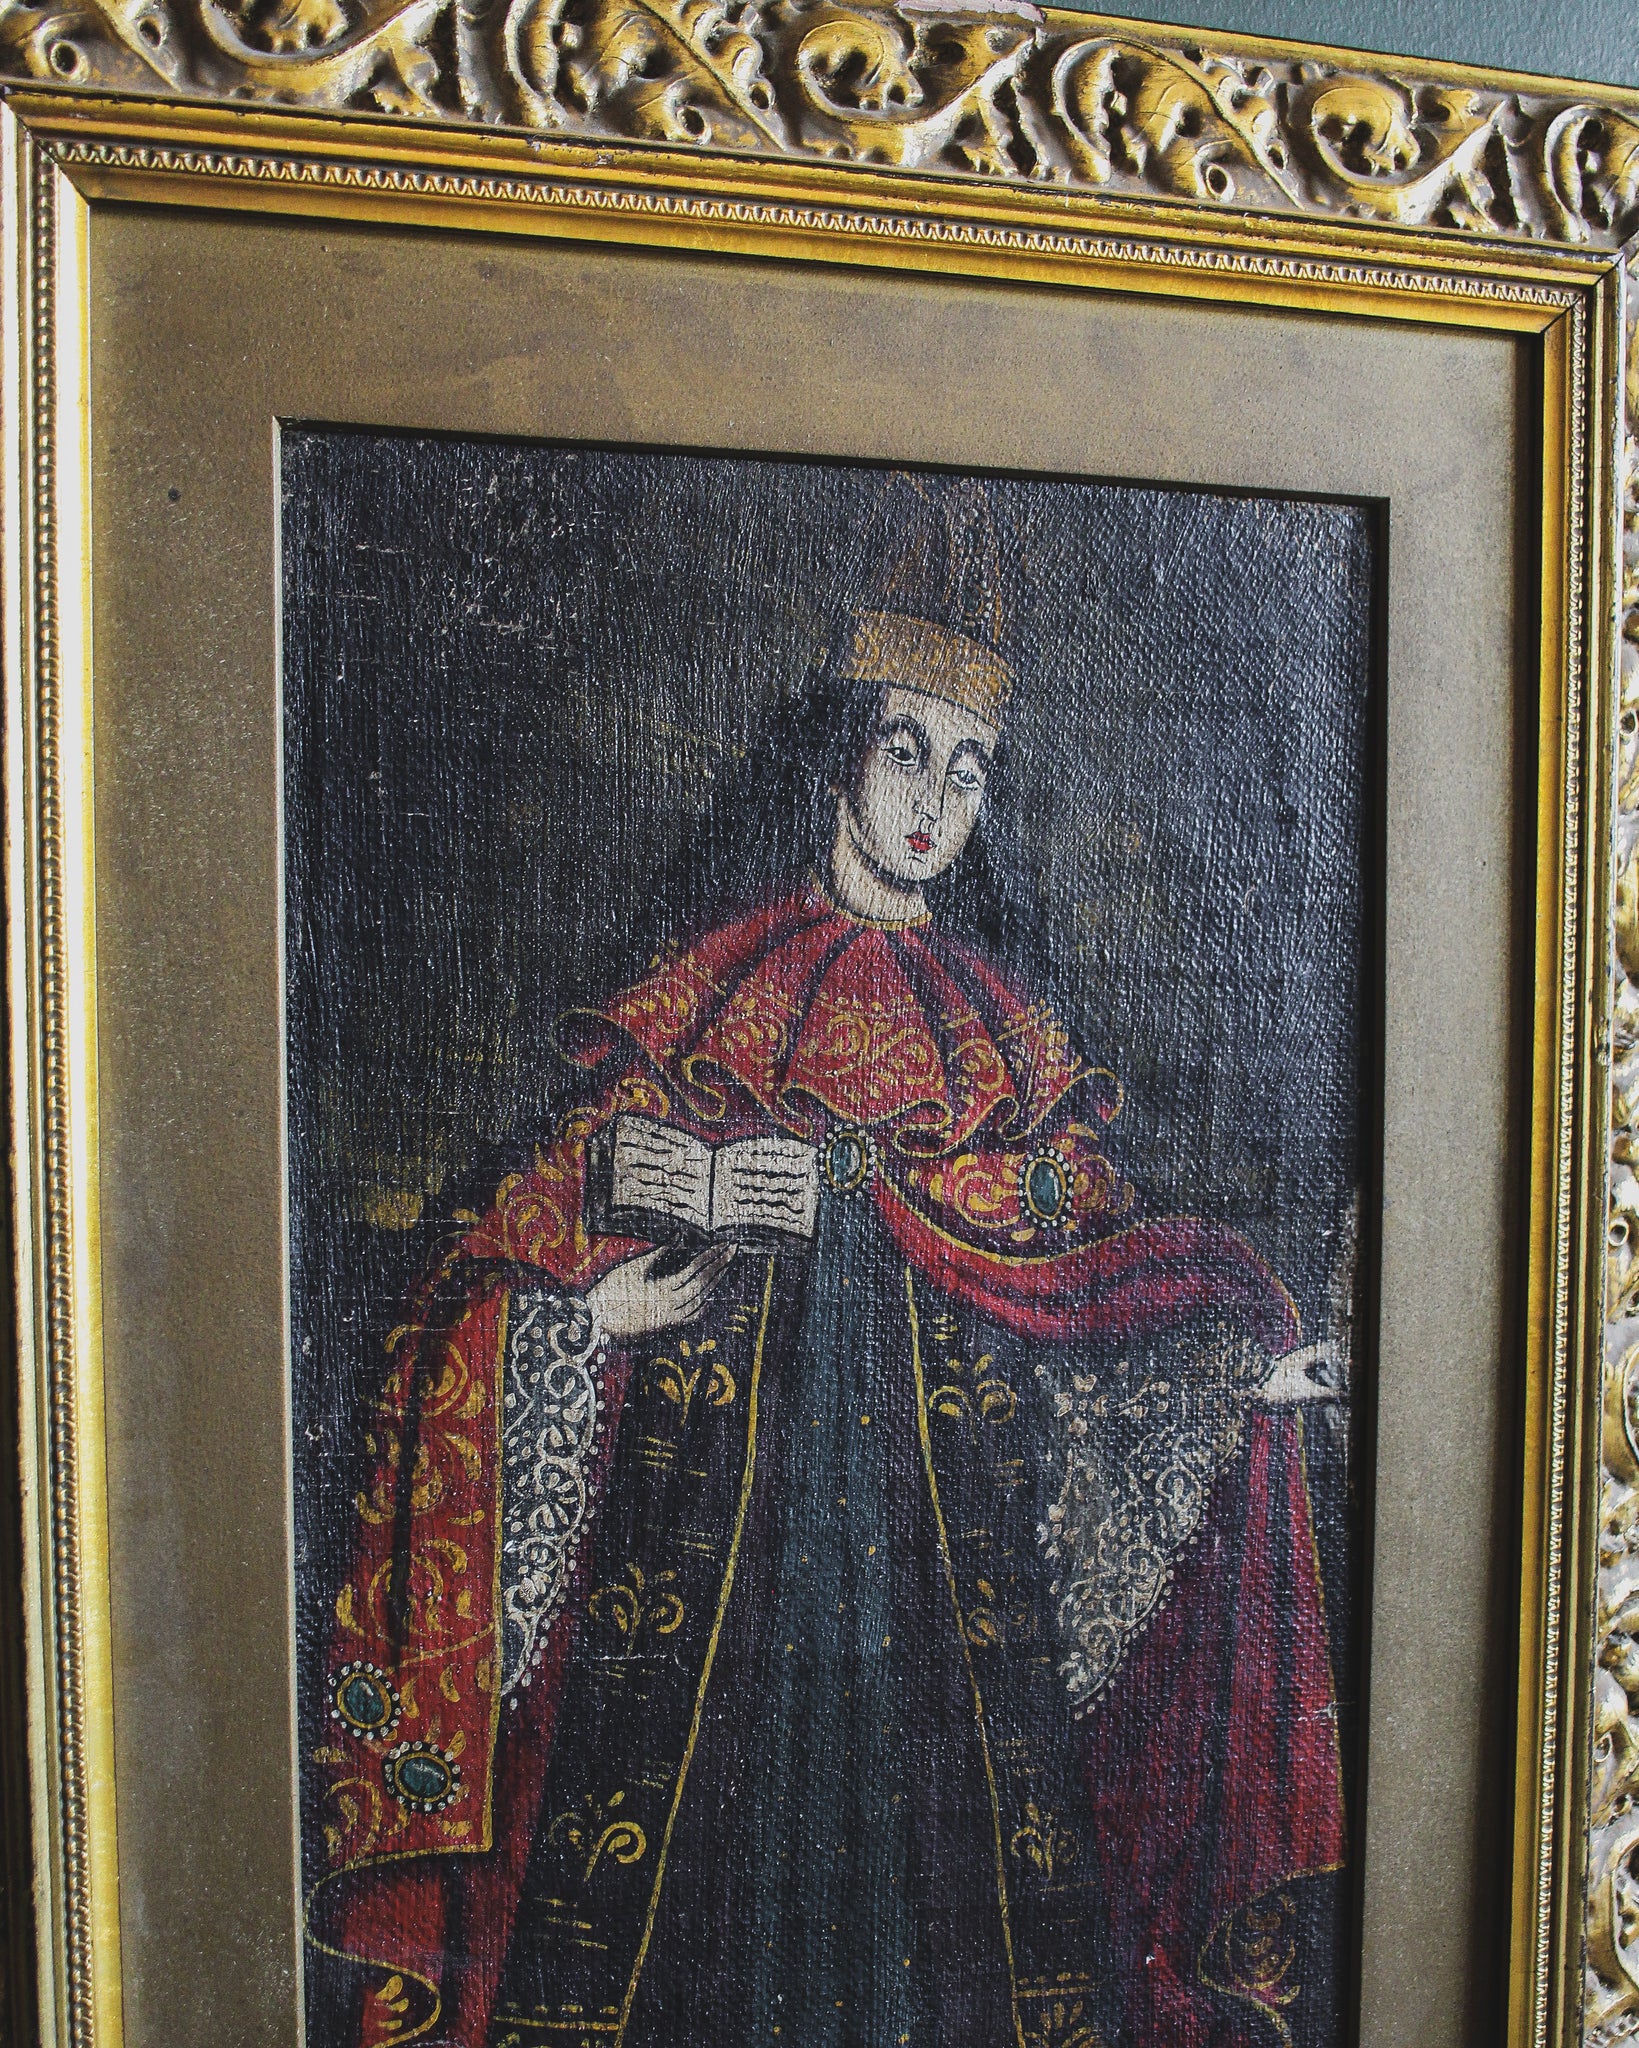 Cuzco School Portrait of Saint in Gilt Frame